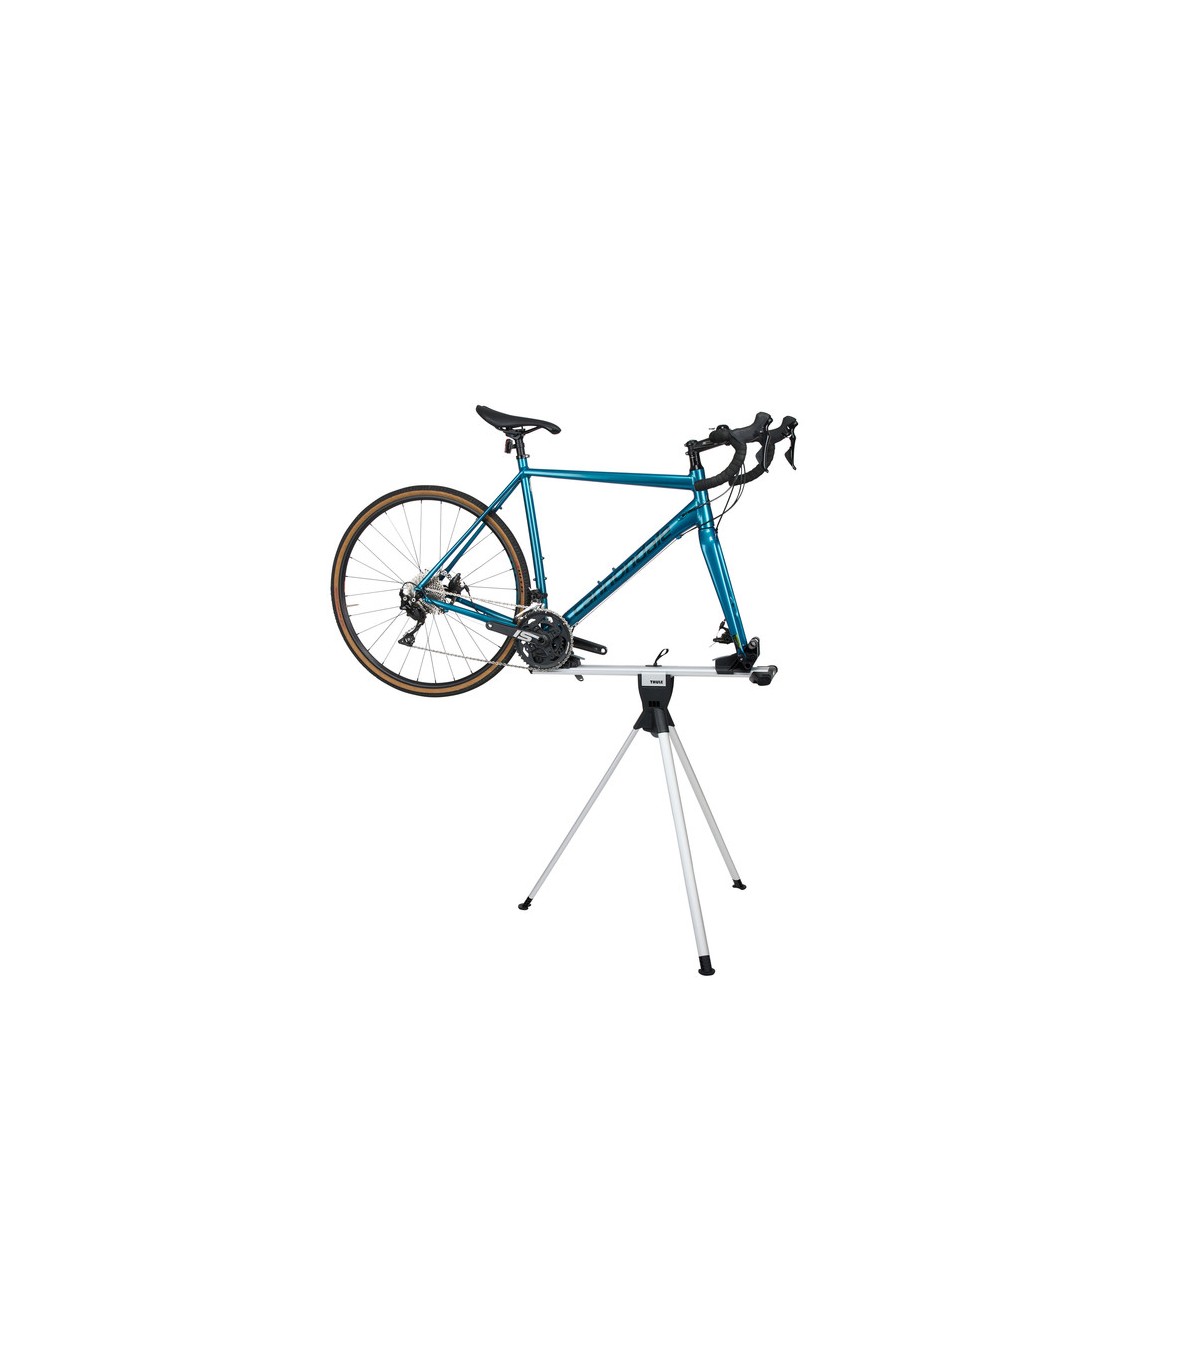 Thule Pack n Pedal portabultos transportin para bicicleta modelo TH100090  Bicicletas y piruletas ciclismo en familia